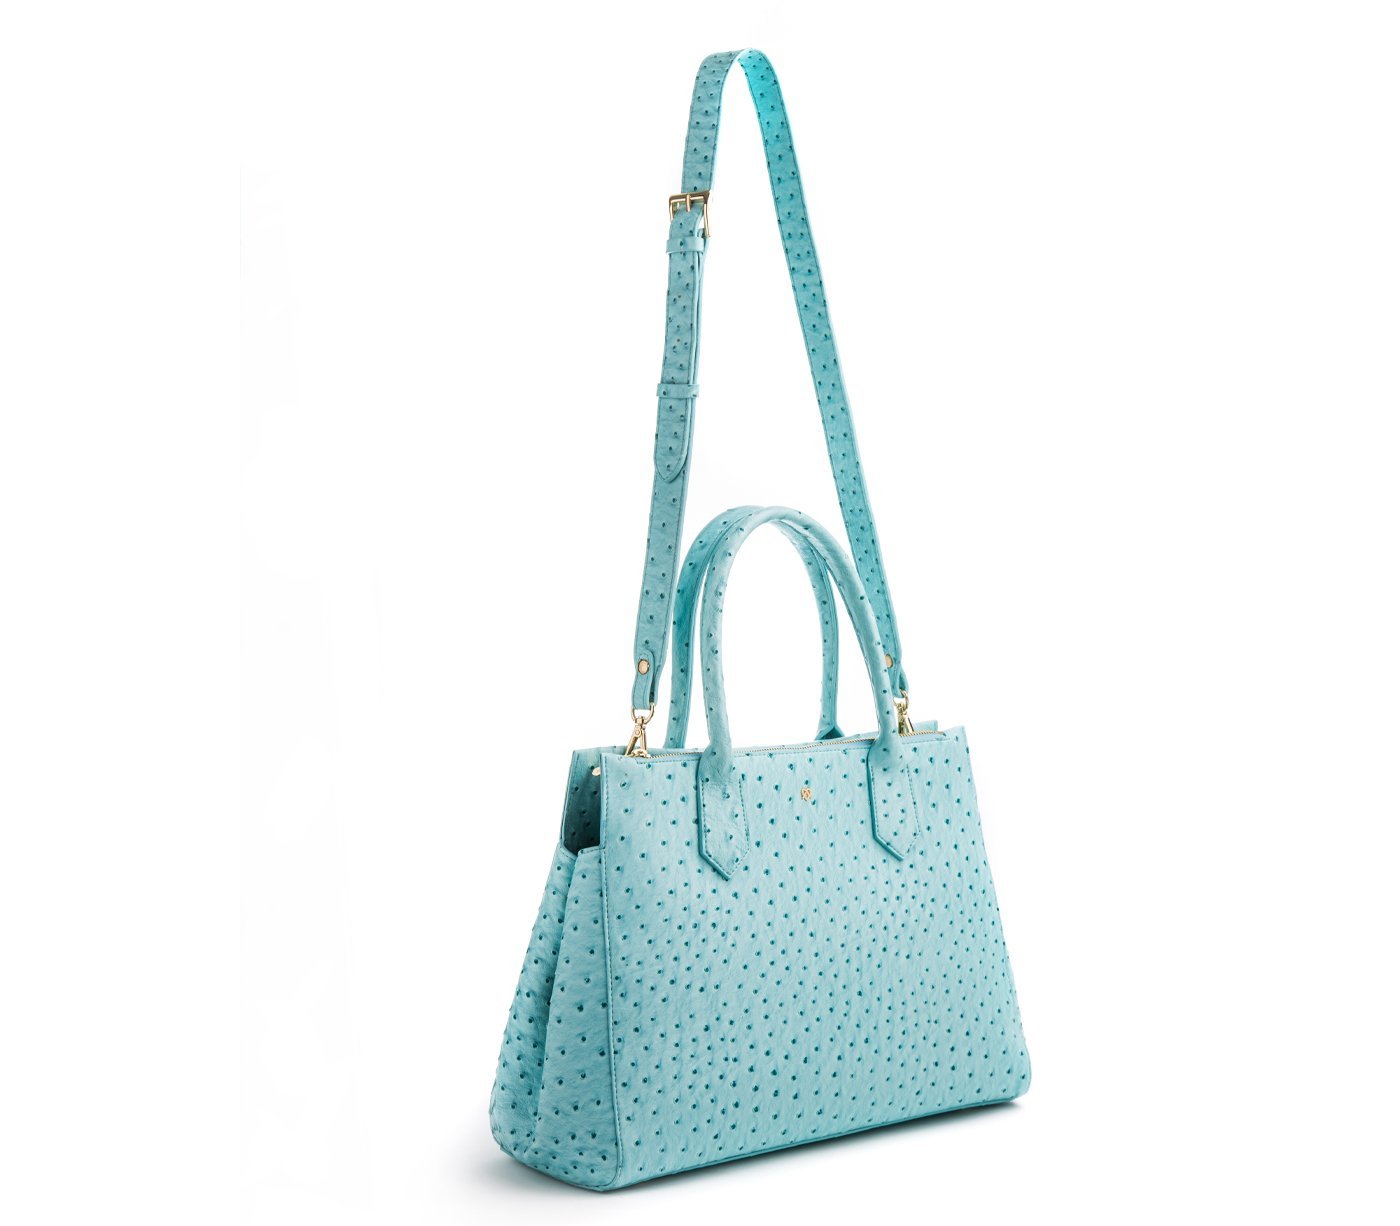 Bags & Luggage - Women's Bags - Top-Handle Bags Koko